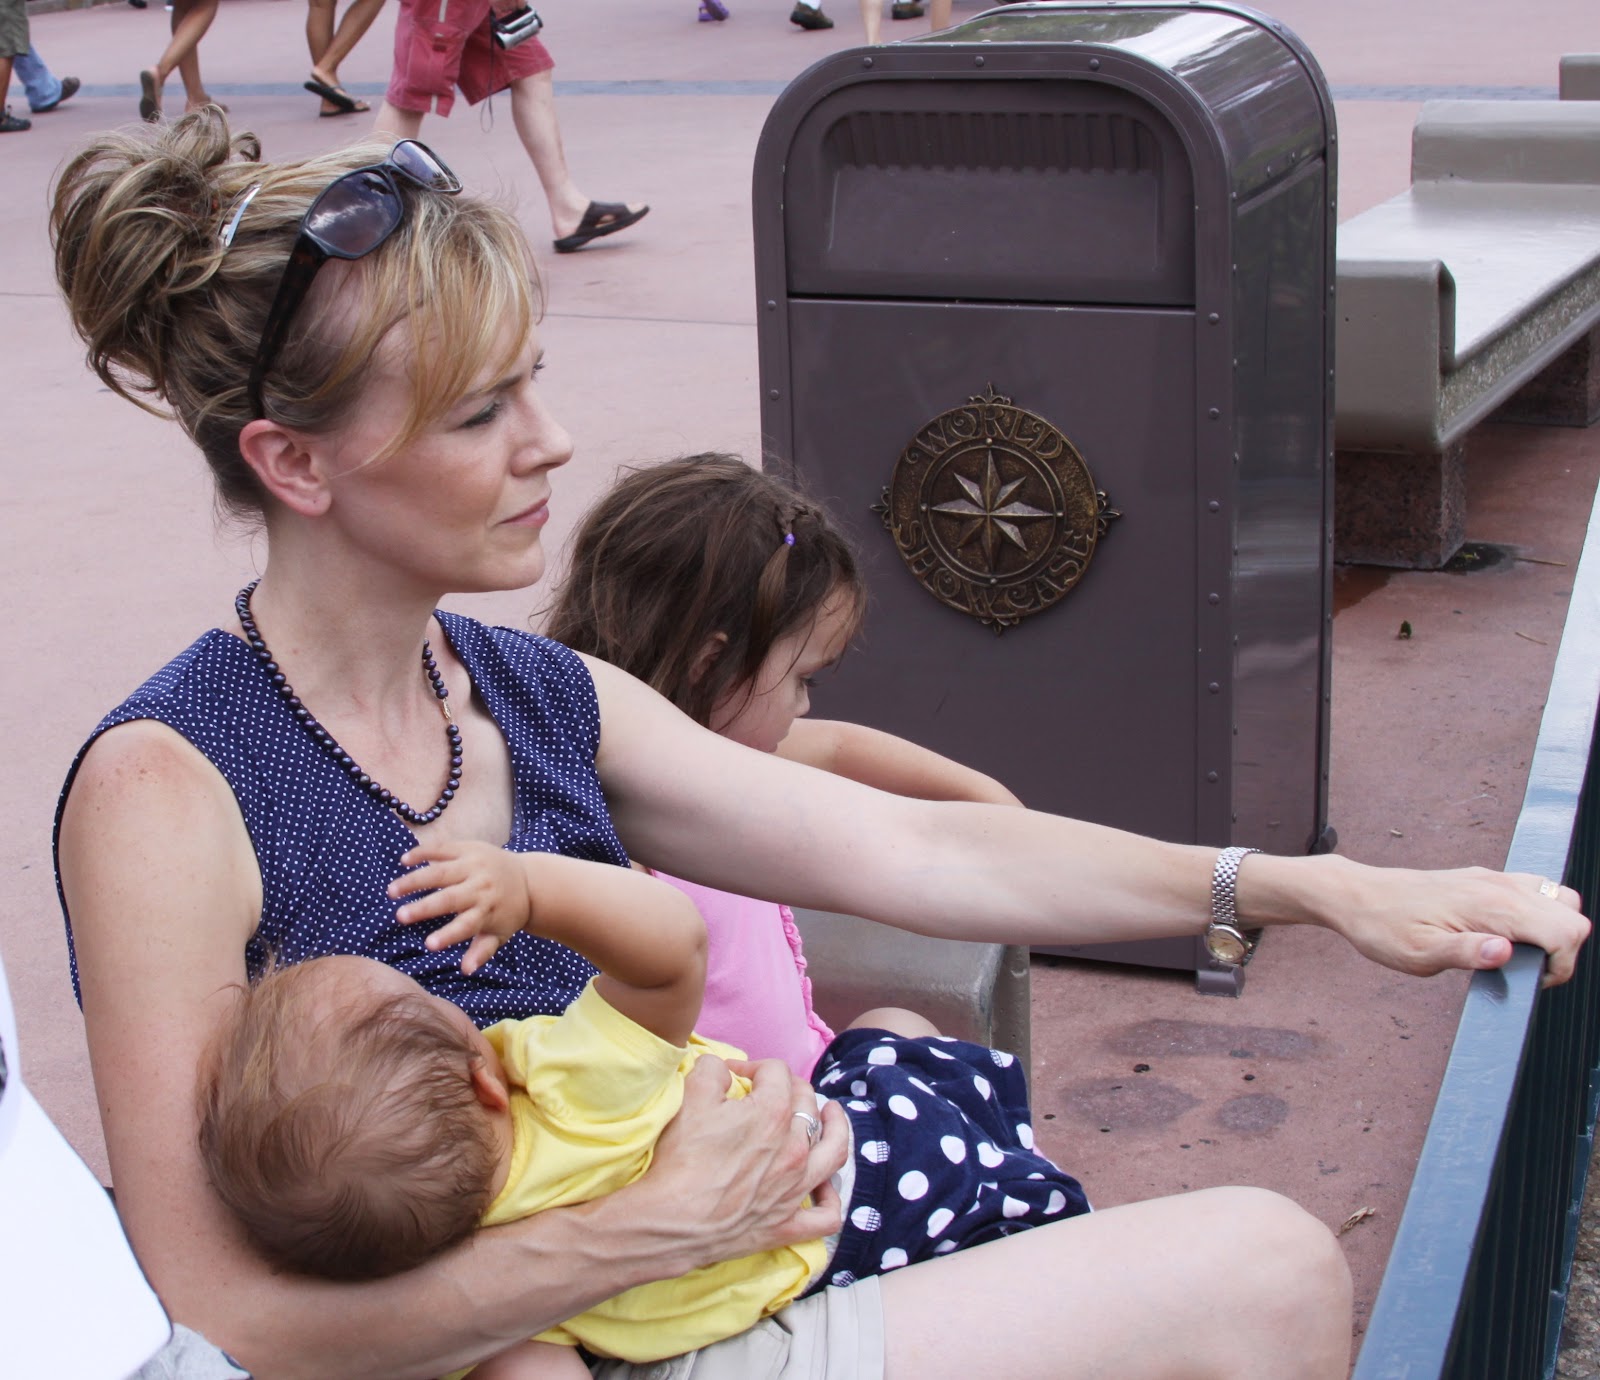 The Breastfeeding Mother: Breastfeeding In Public